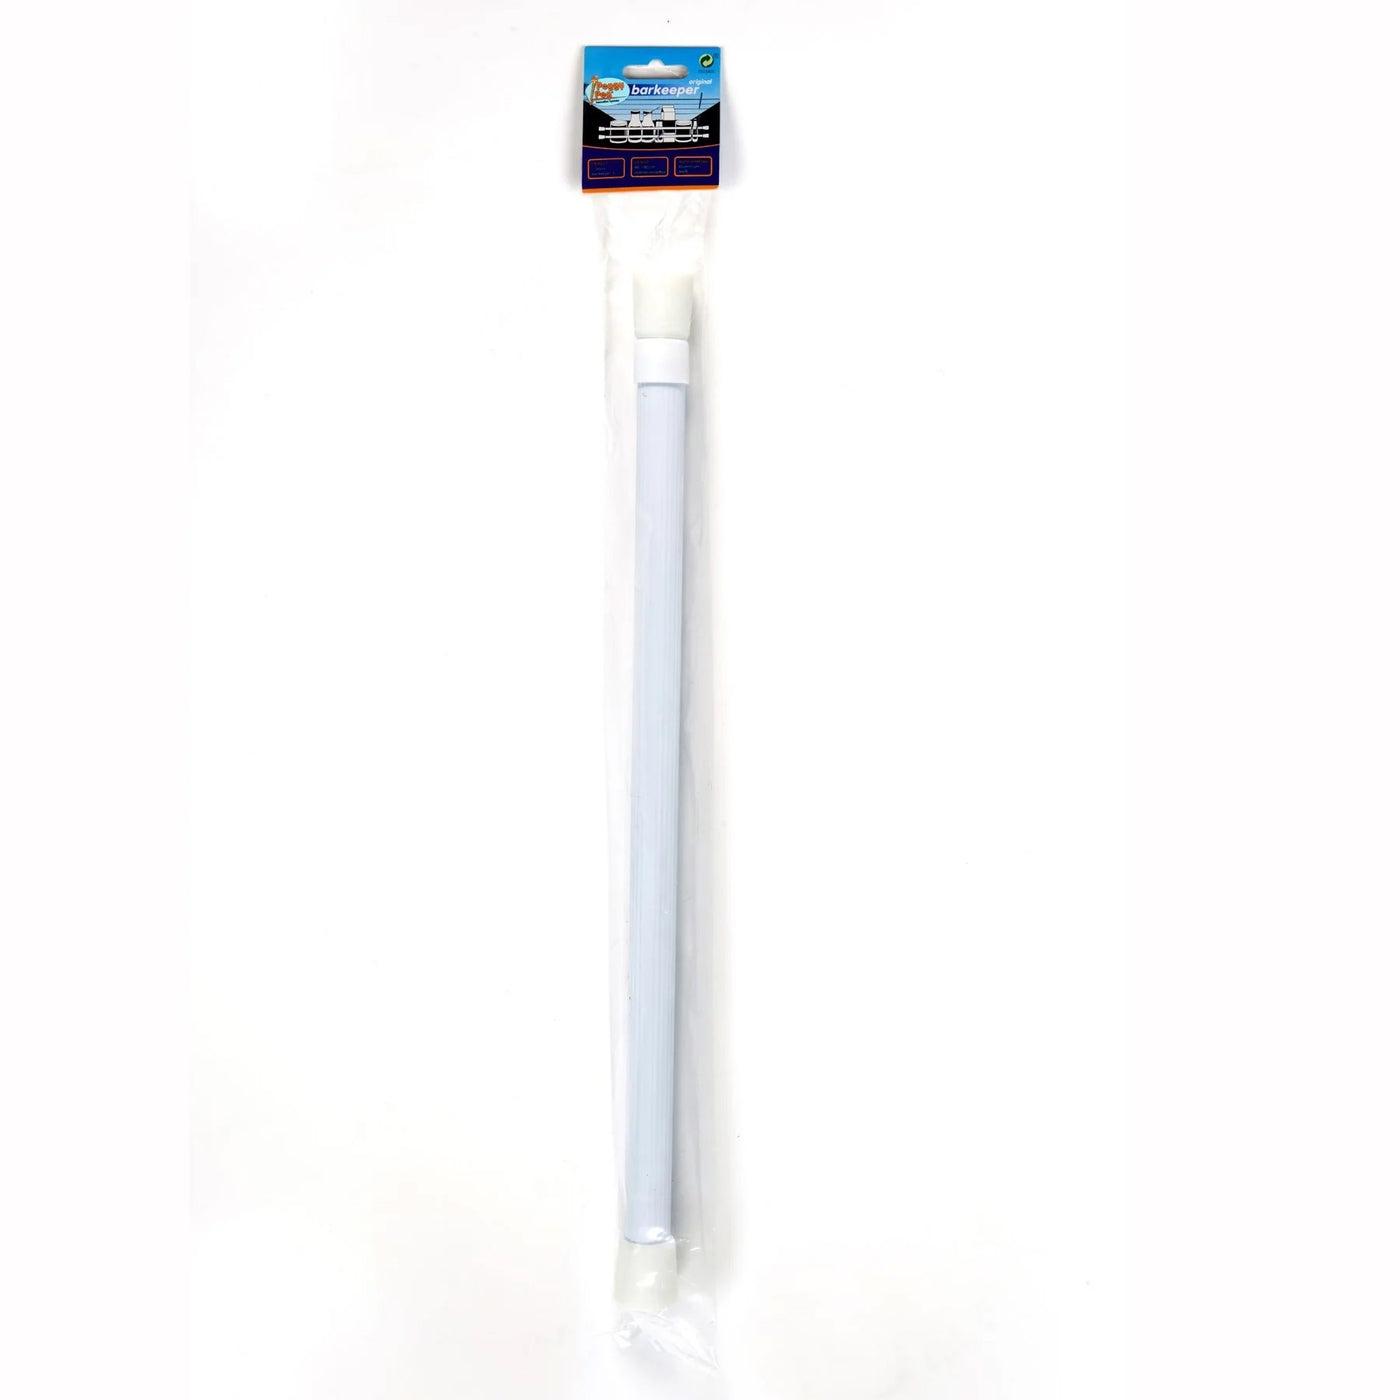 barkeeper® Aluminium X-Long (XL) 48-80cm white • Single item • Tension rod